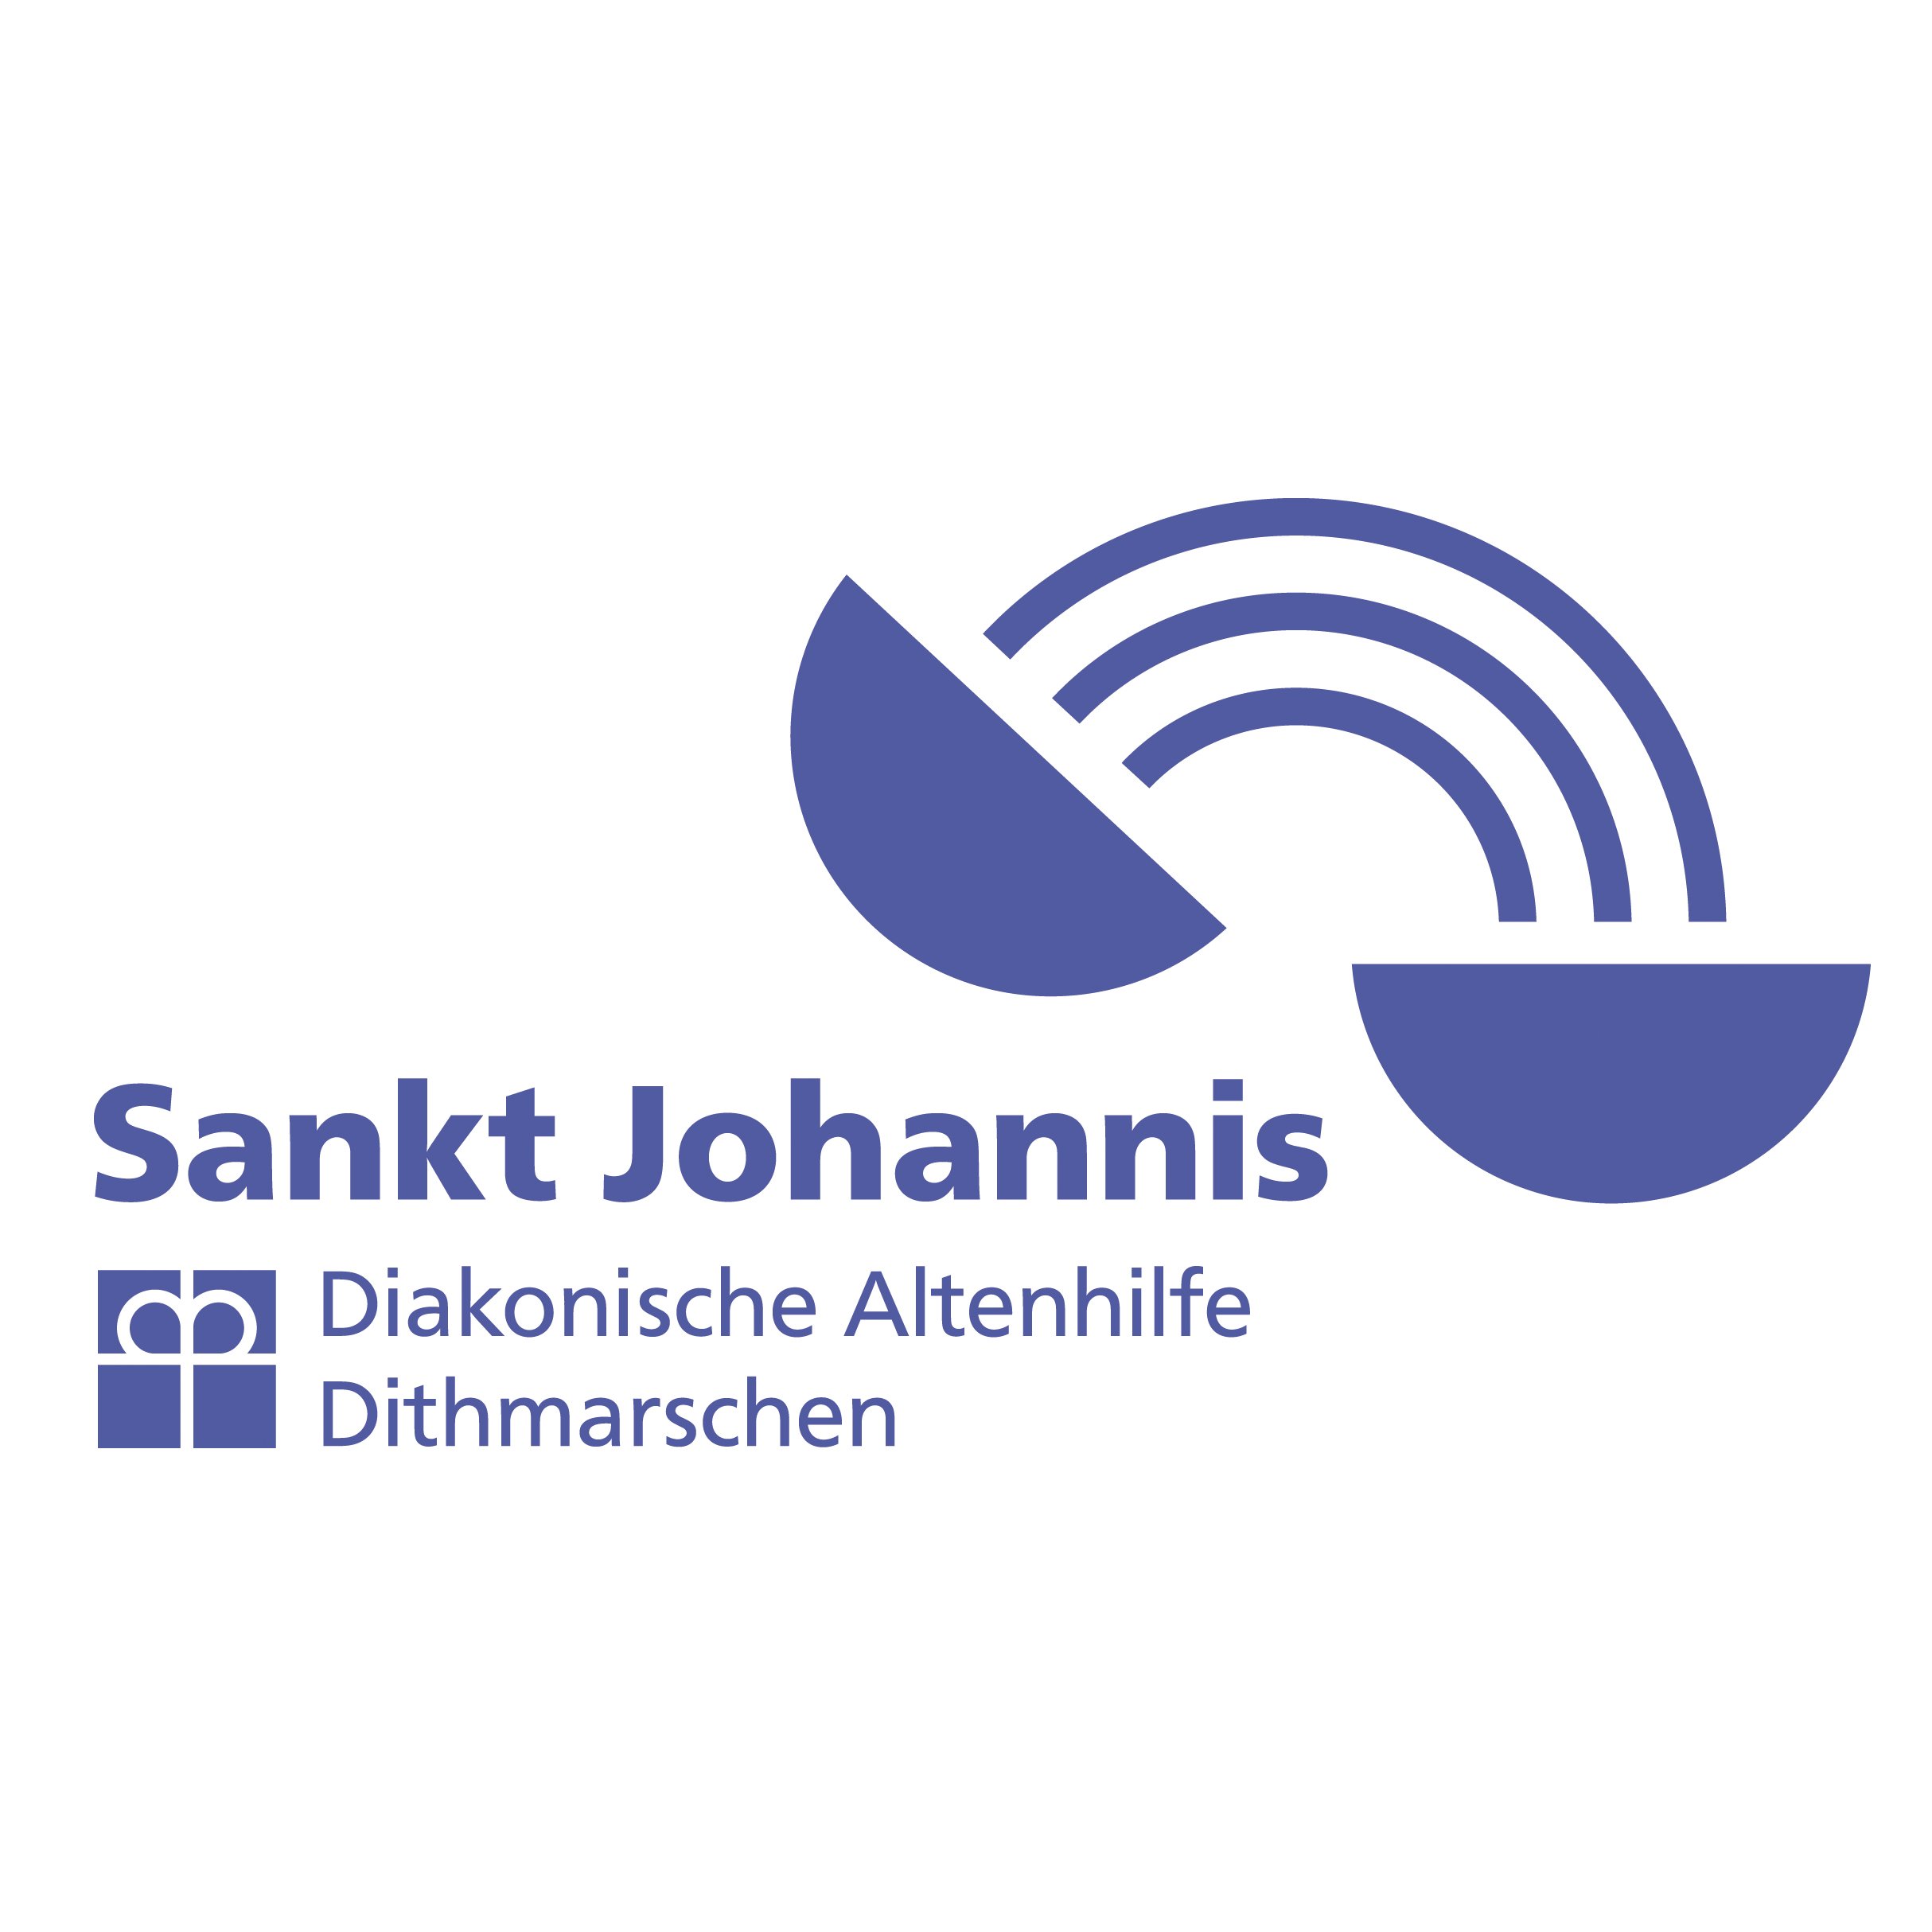 St. Johannis Diakonische Altenhilfe Dithmarschen gGmbH Logo